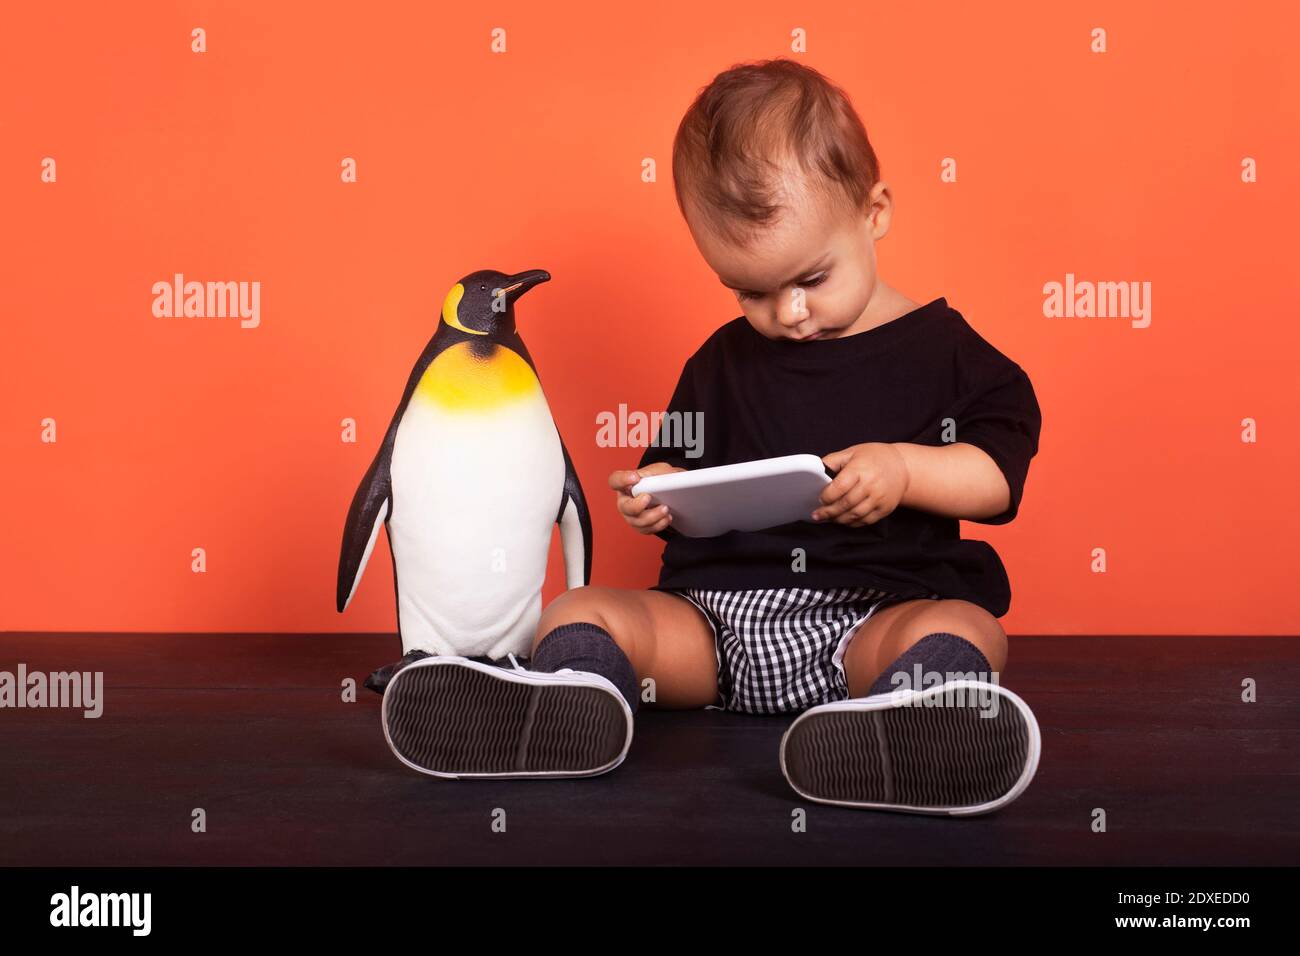 Baby girl ignoring toy while using mobile phone sitting against orange background Stock Photo